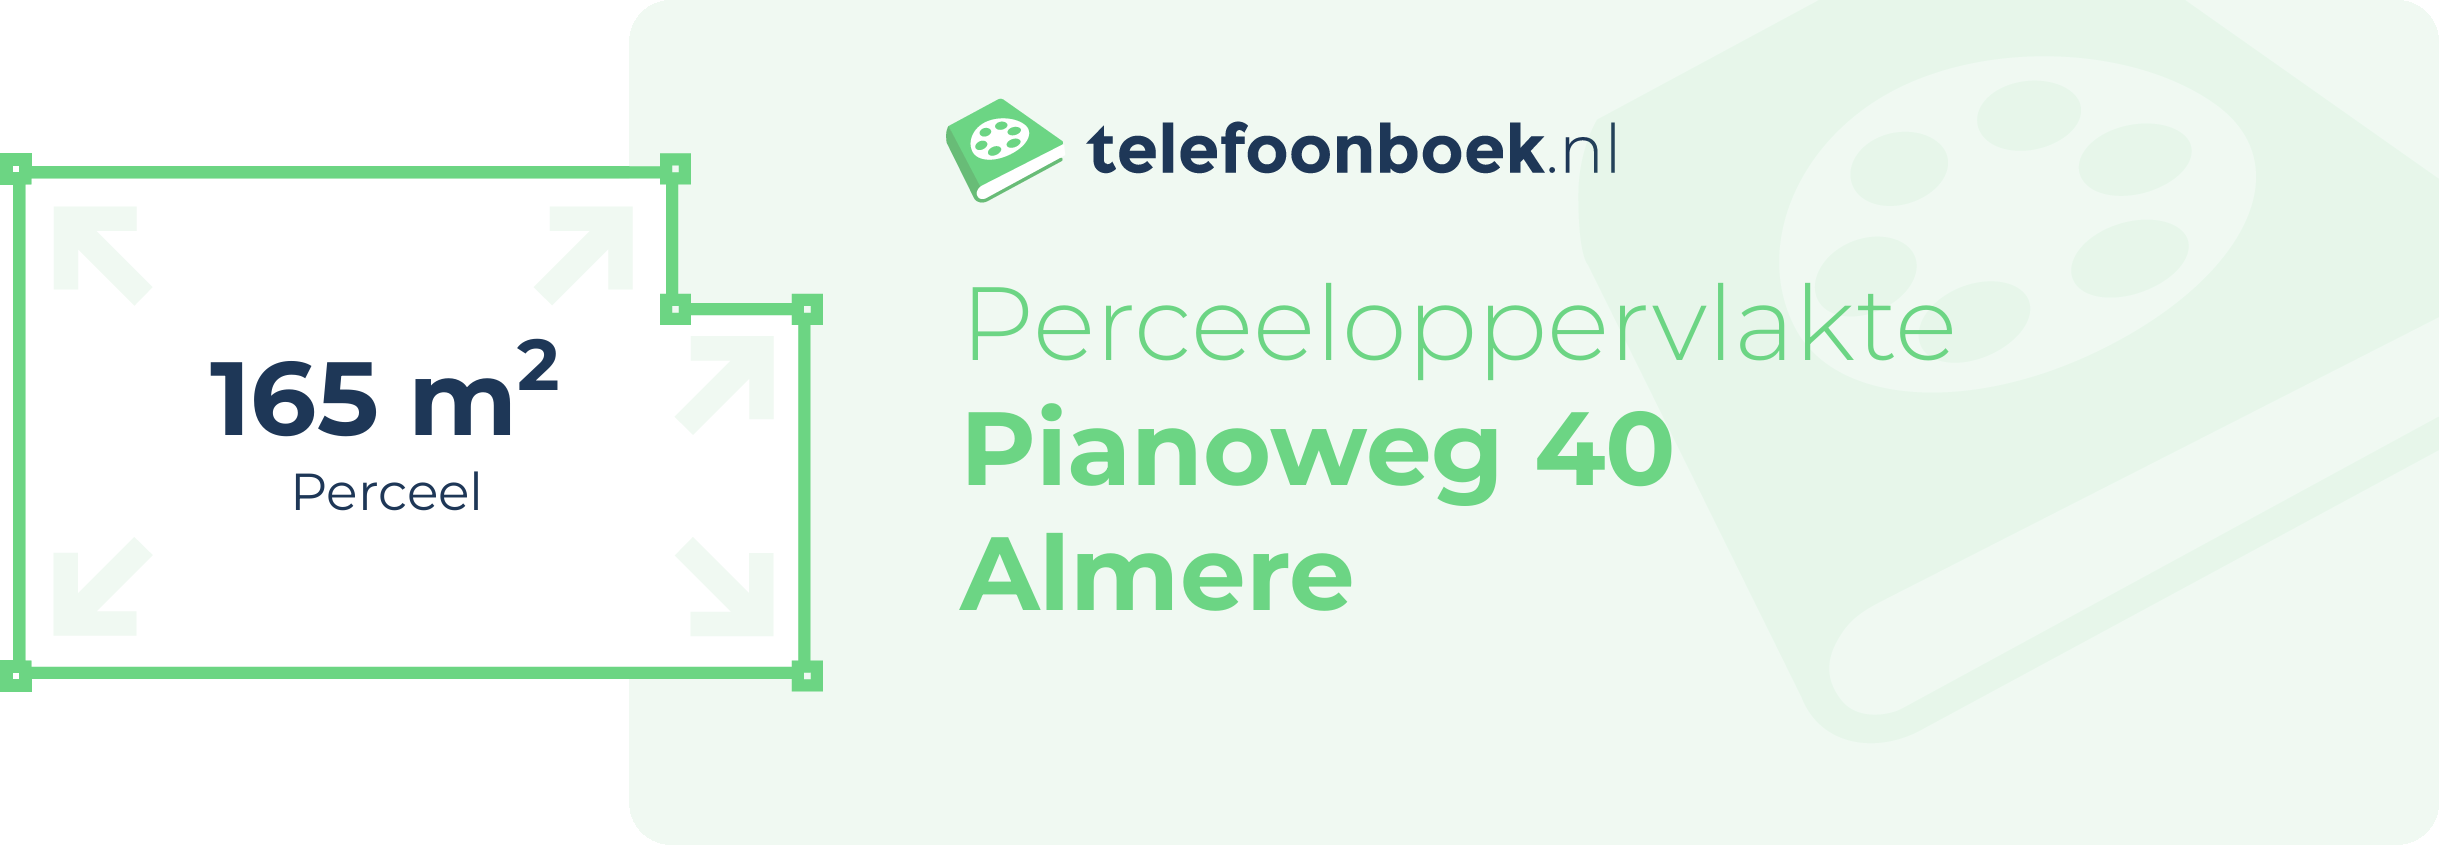 Perceeloppervlakte Pianoweg 40 Almere